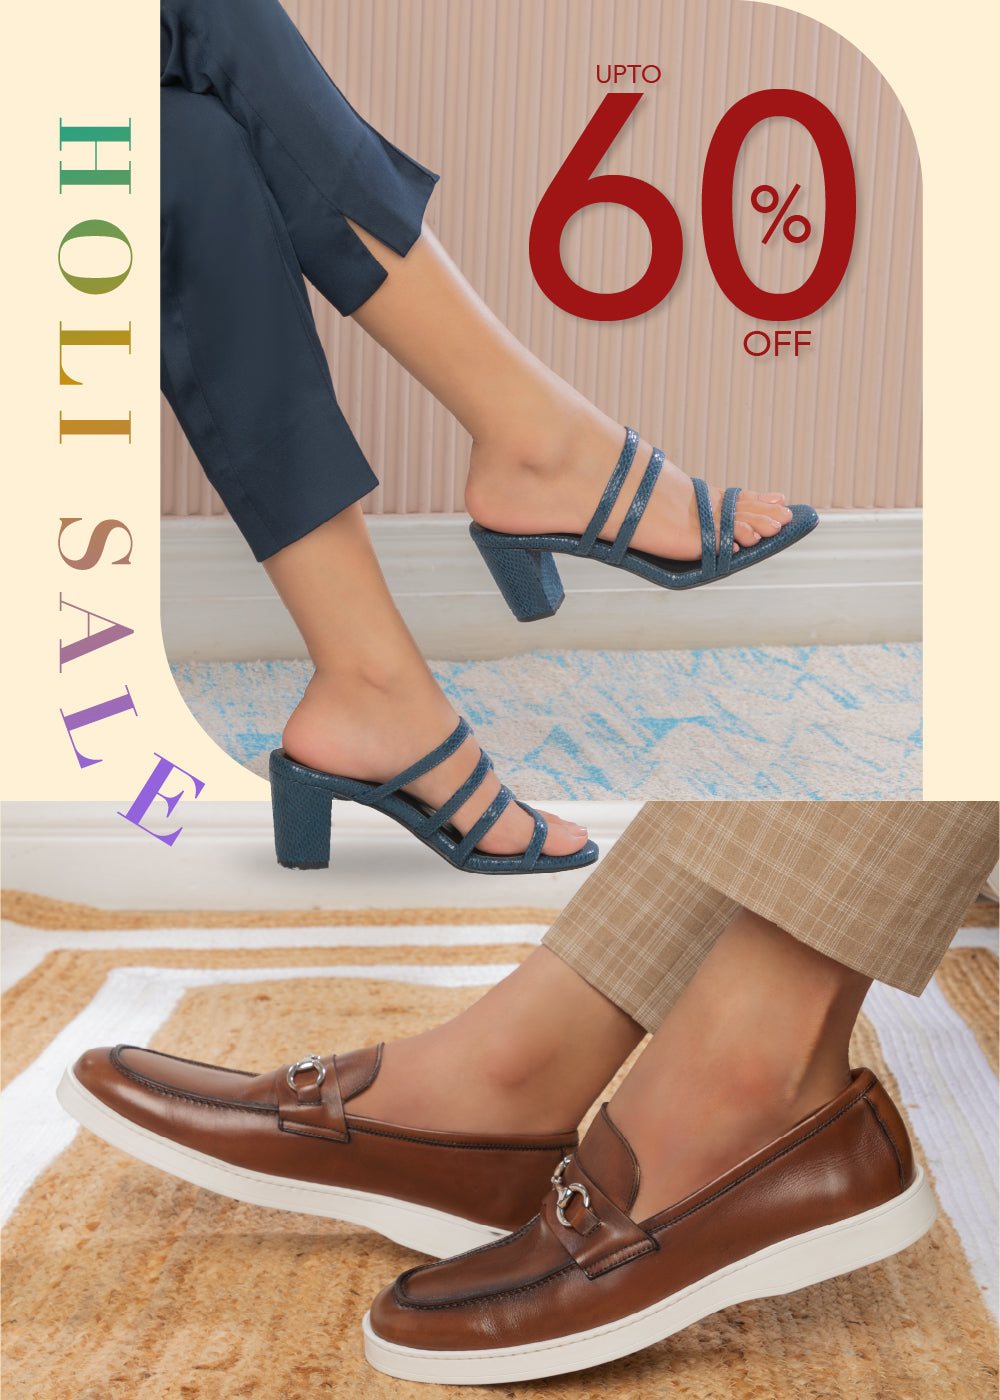 Buy Best Men's Sandals Online at Low Price – Walkaroo Footwear